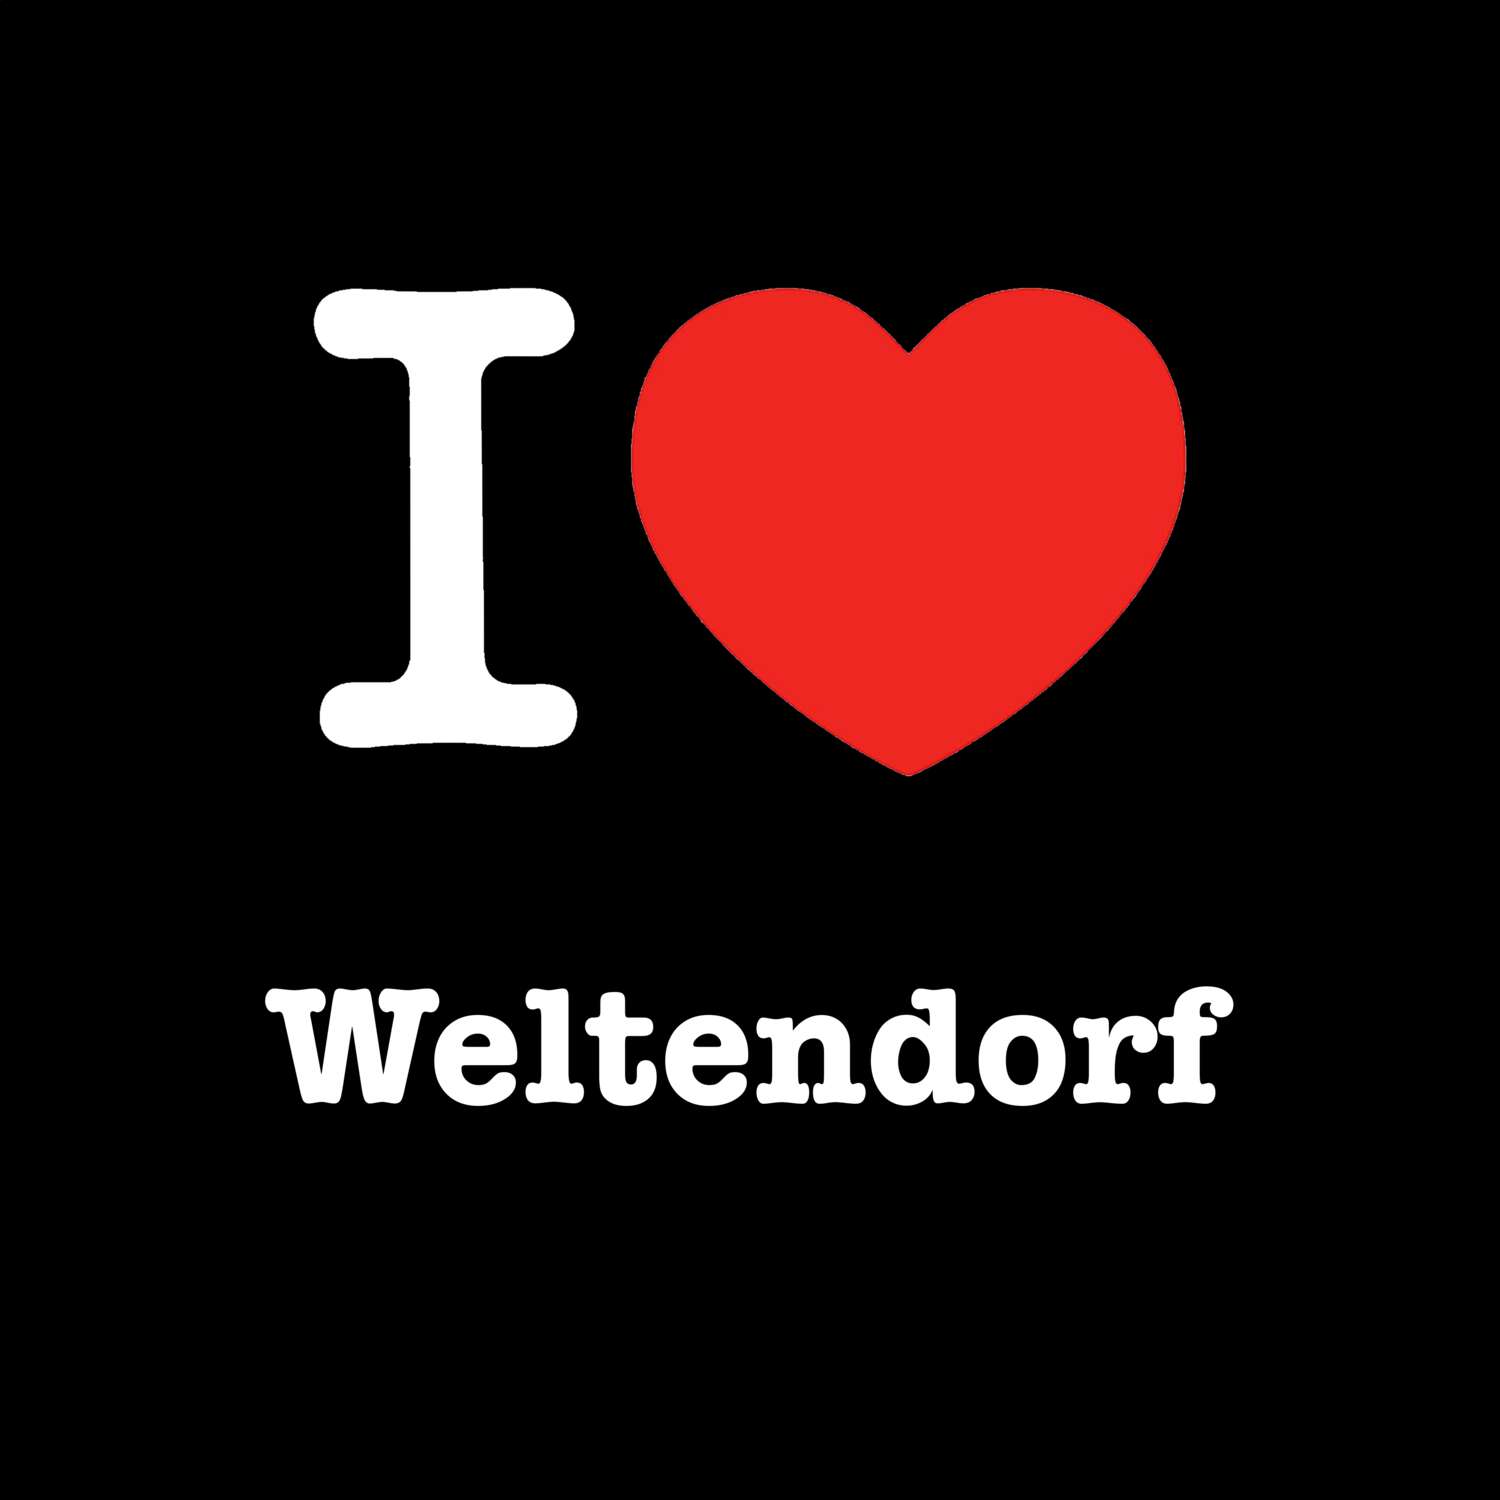 Weltendorf T-Shirt »I love«